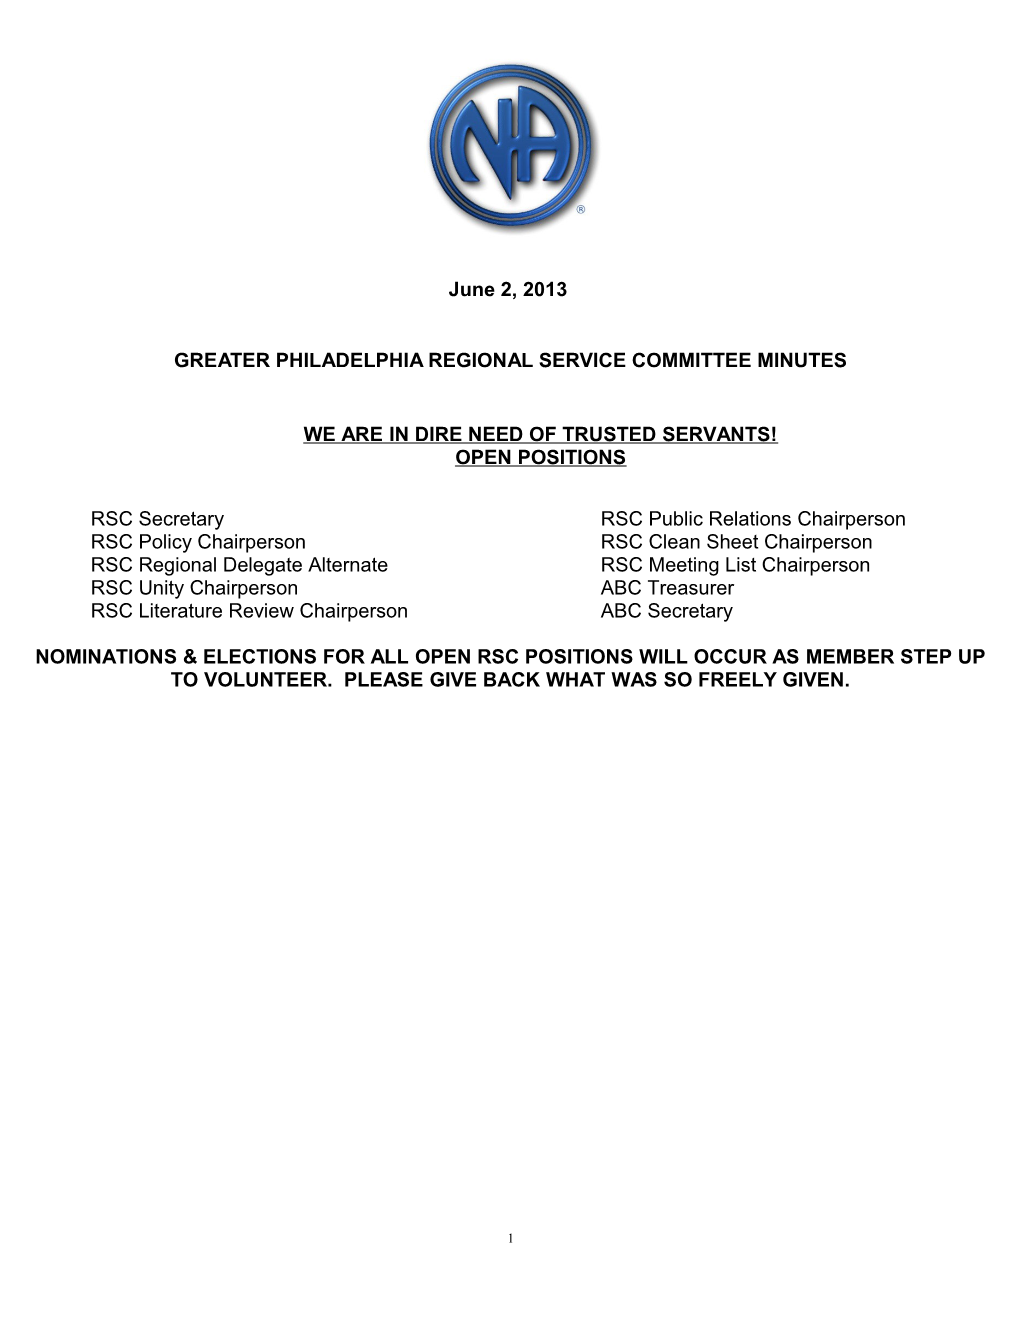 Greater Philadelphia Regional Service Committee Minutes